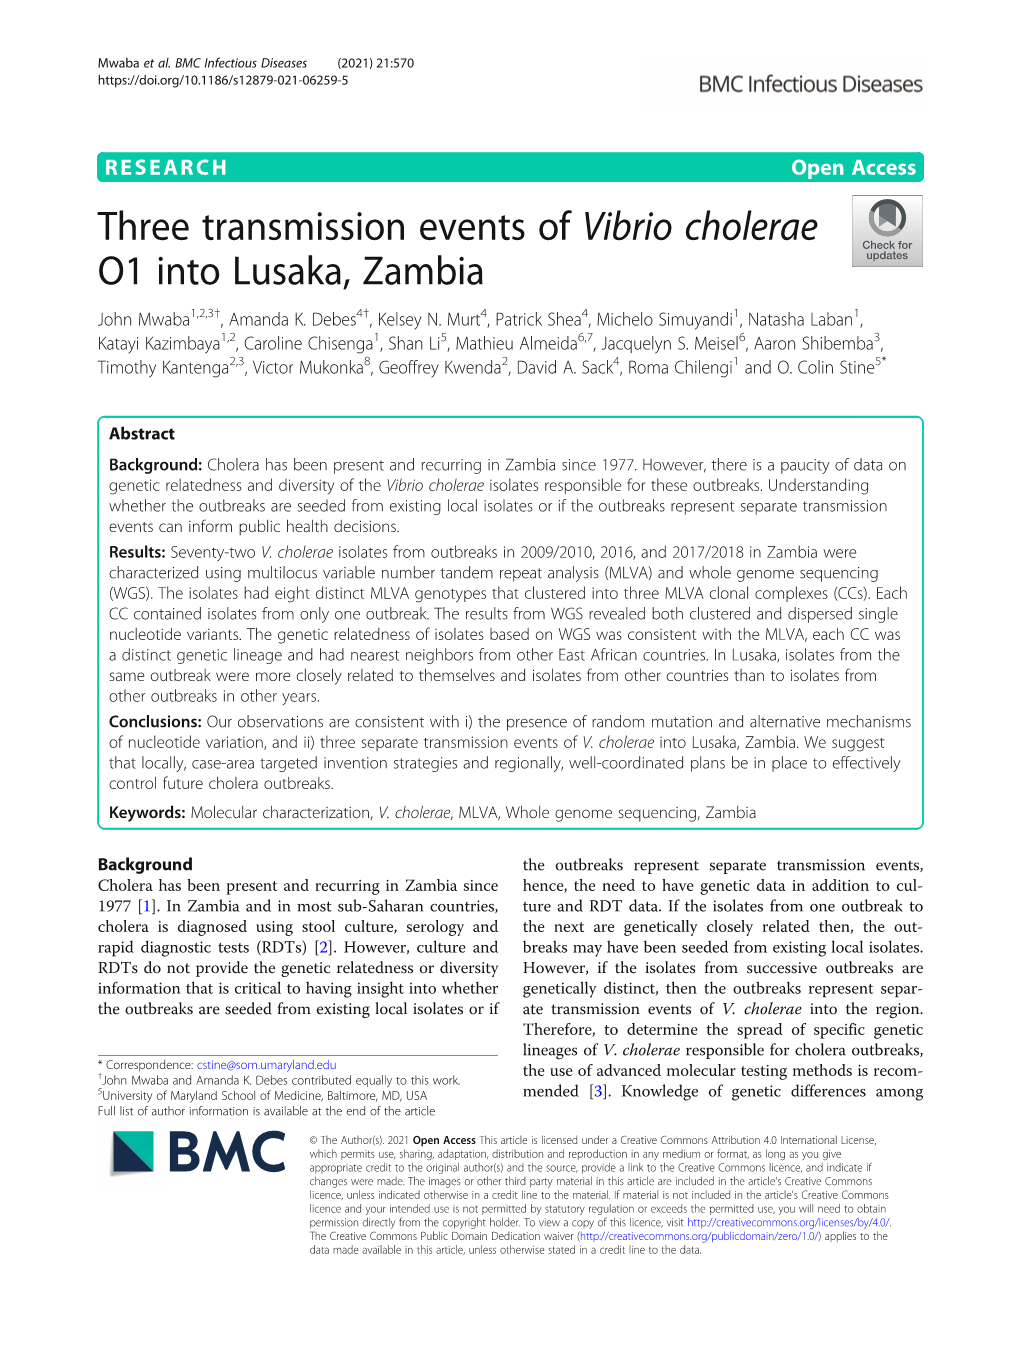 Three Transmission Events of Vibrio Cholerae O1 Into Lusaka, Zambia John Mwaba1,2,3†, Amanda K